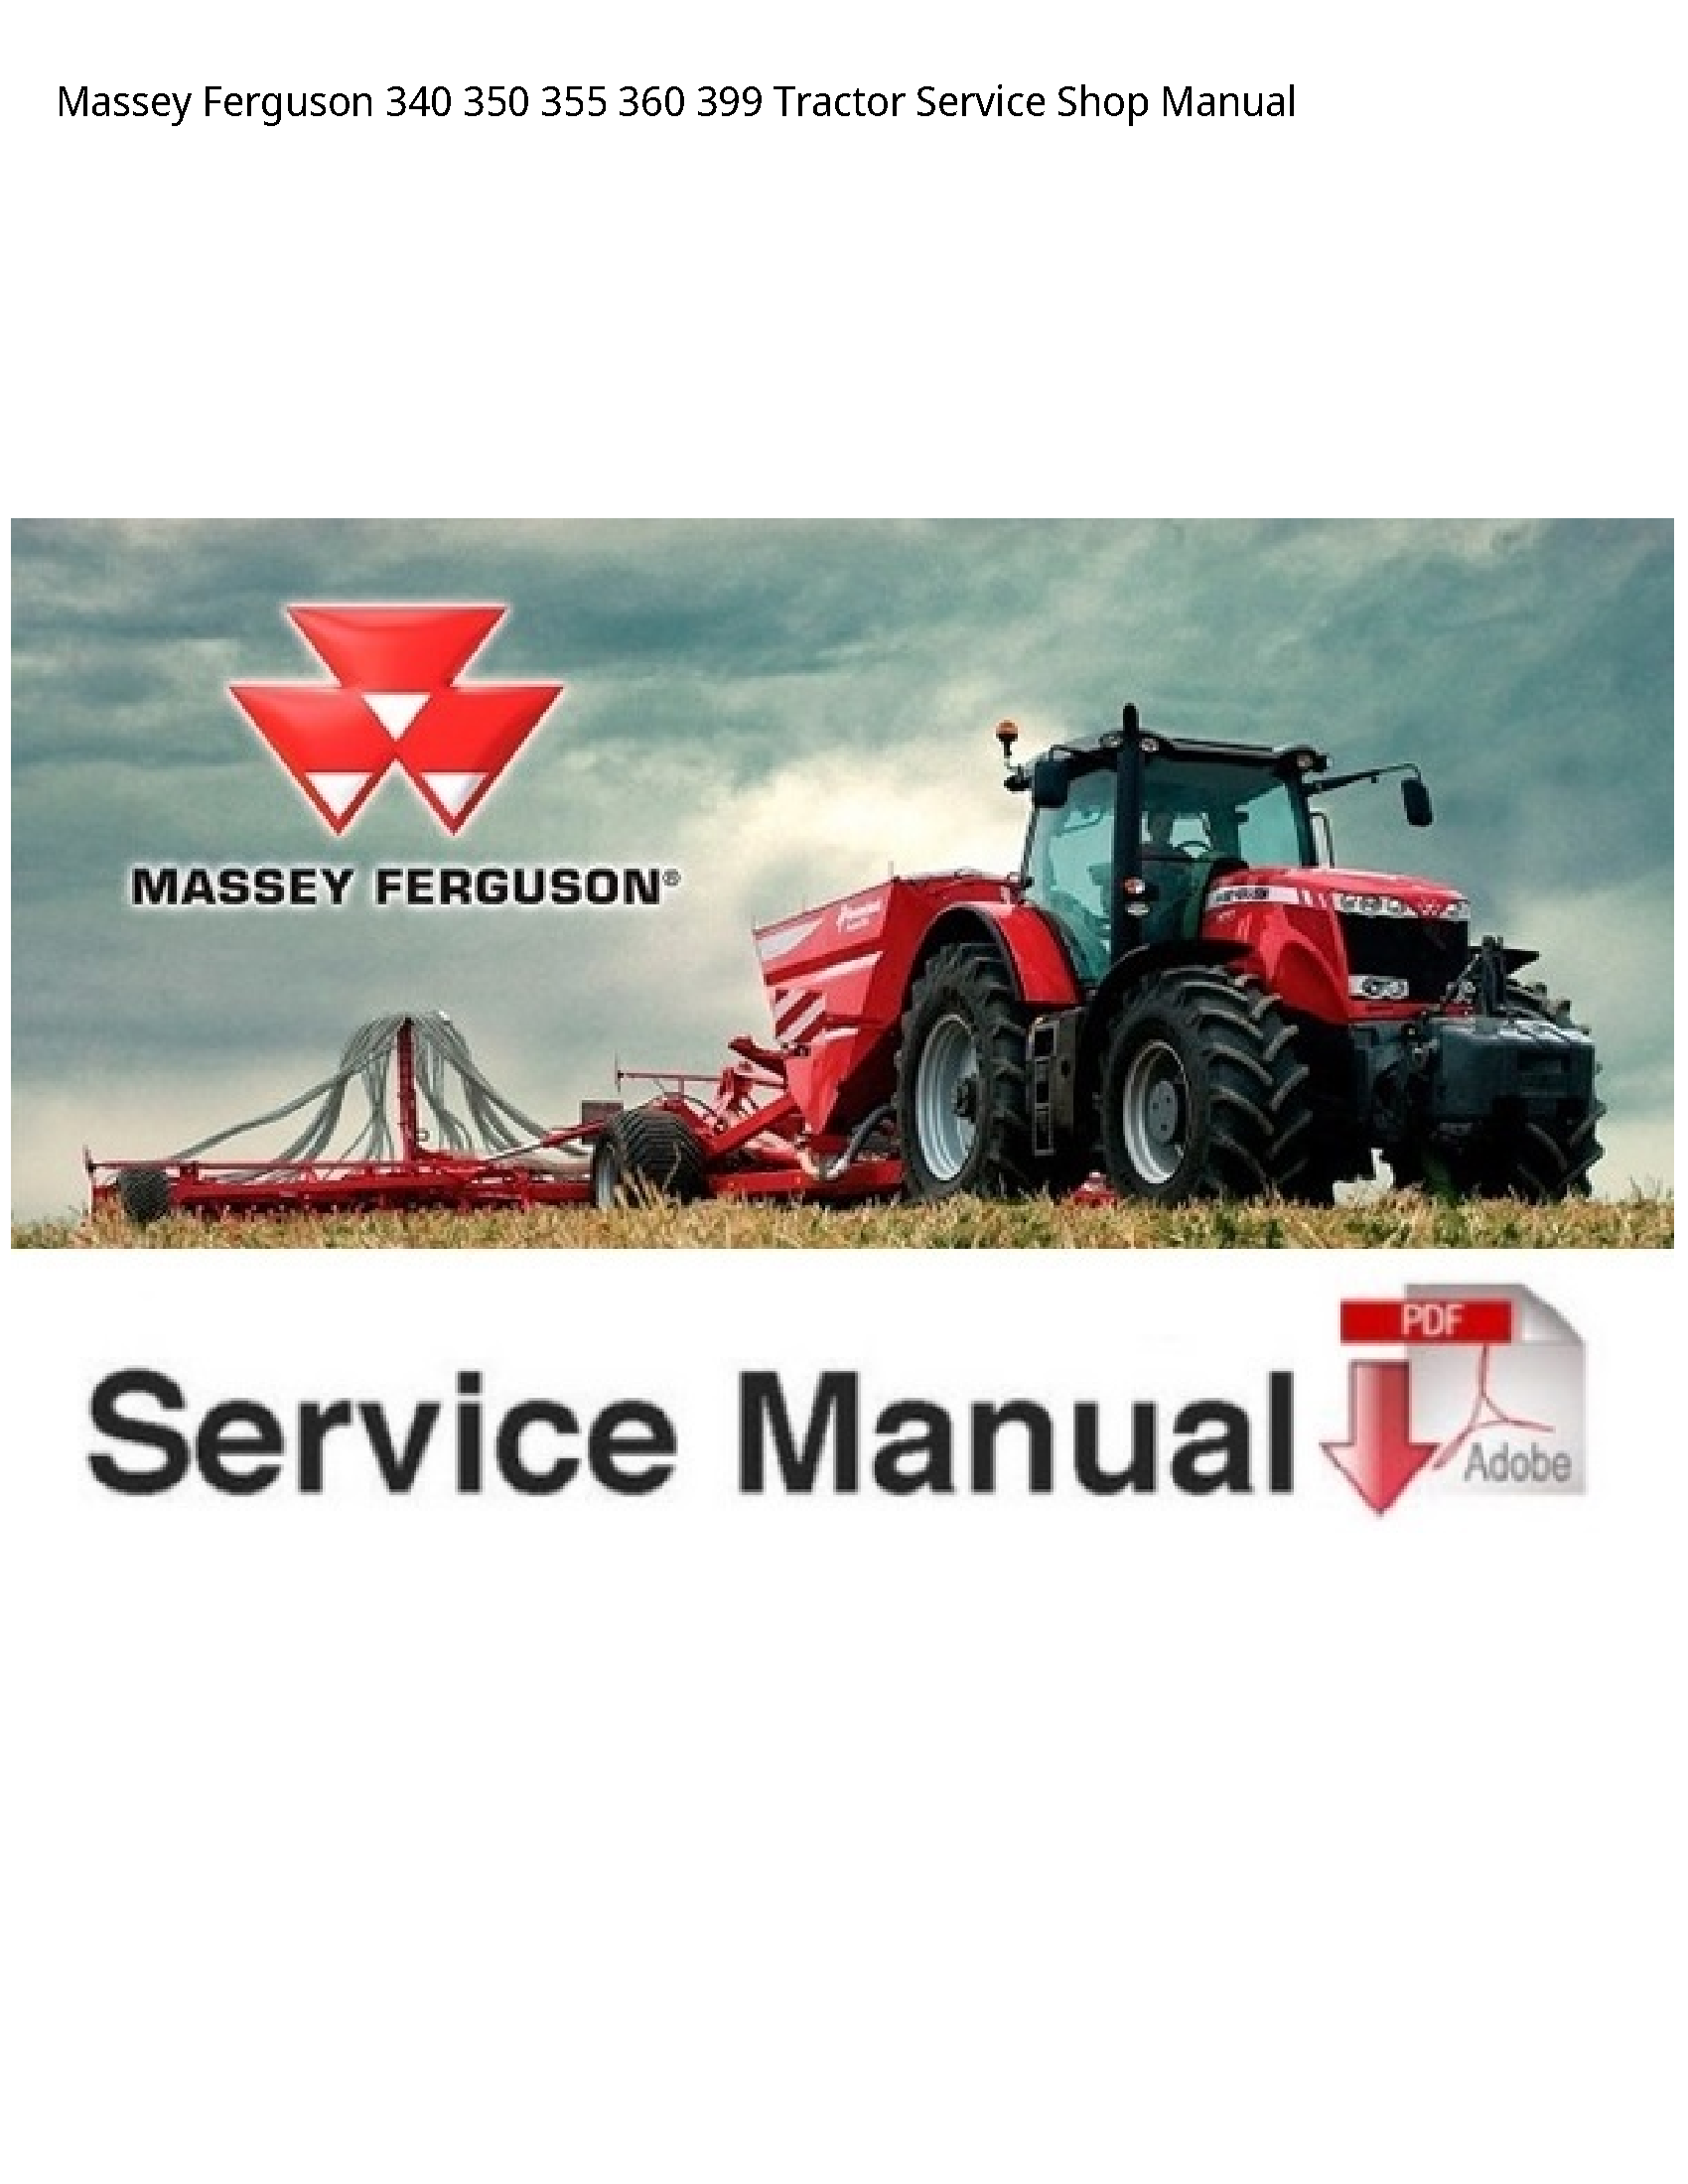 Massey Ferguson 340 Tractor Service Shop manual